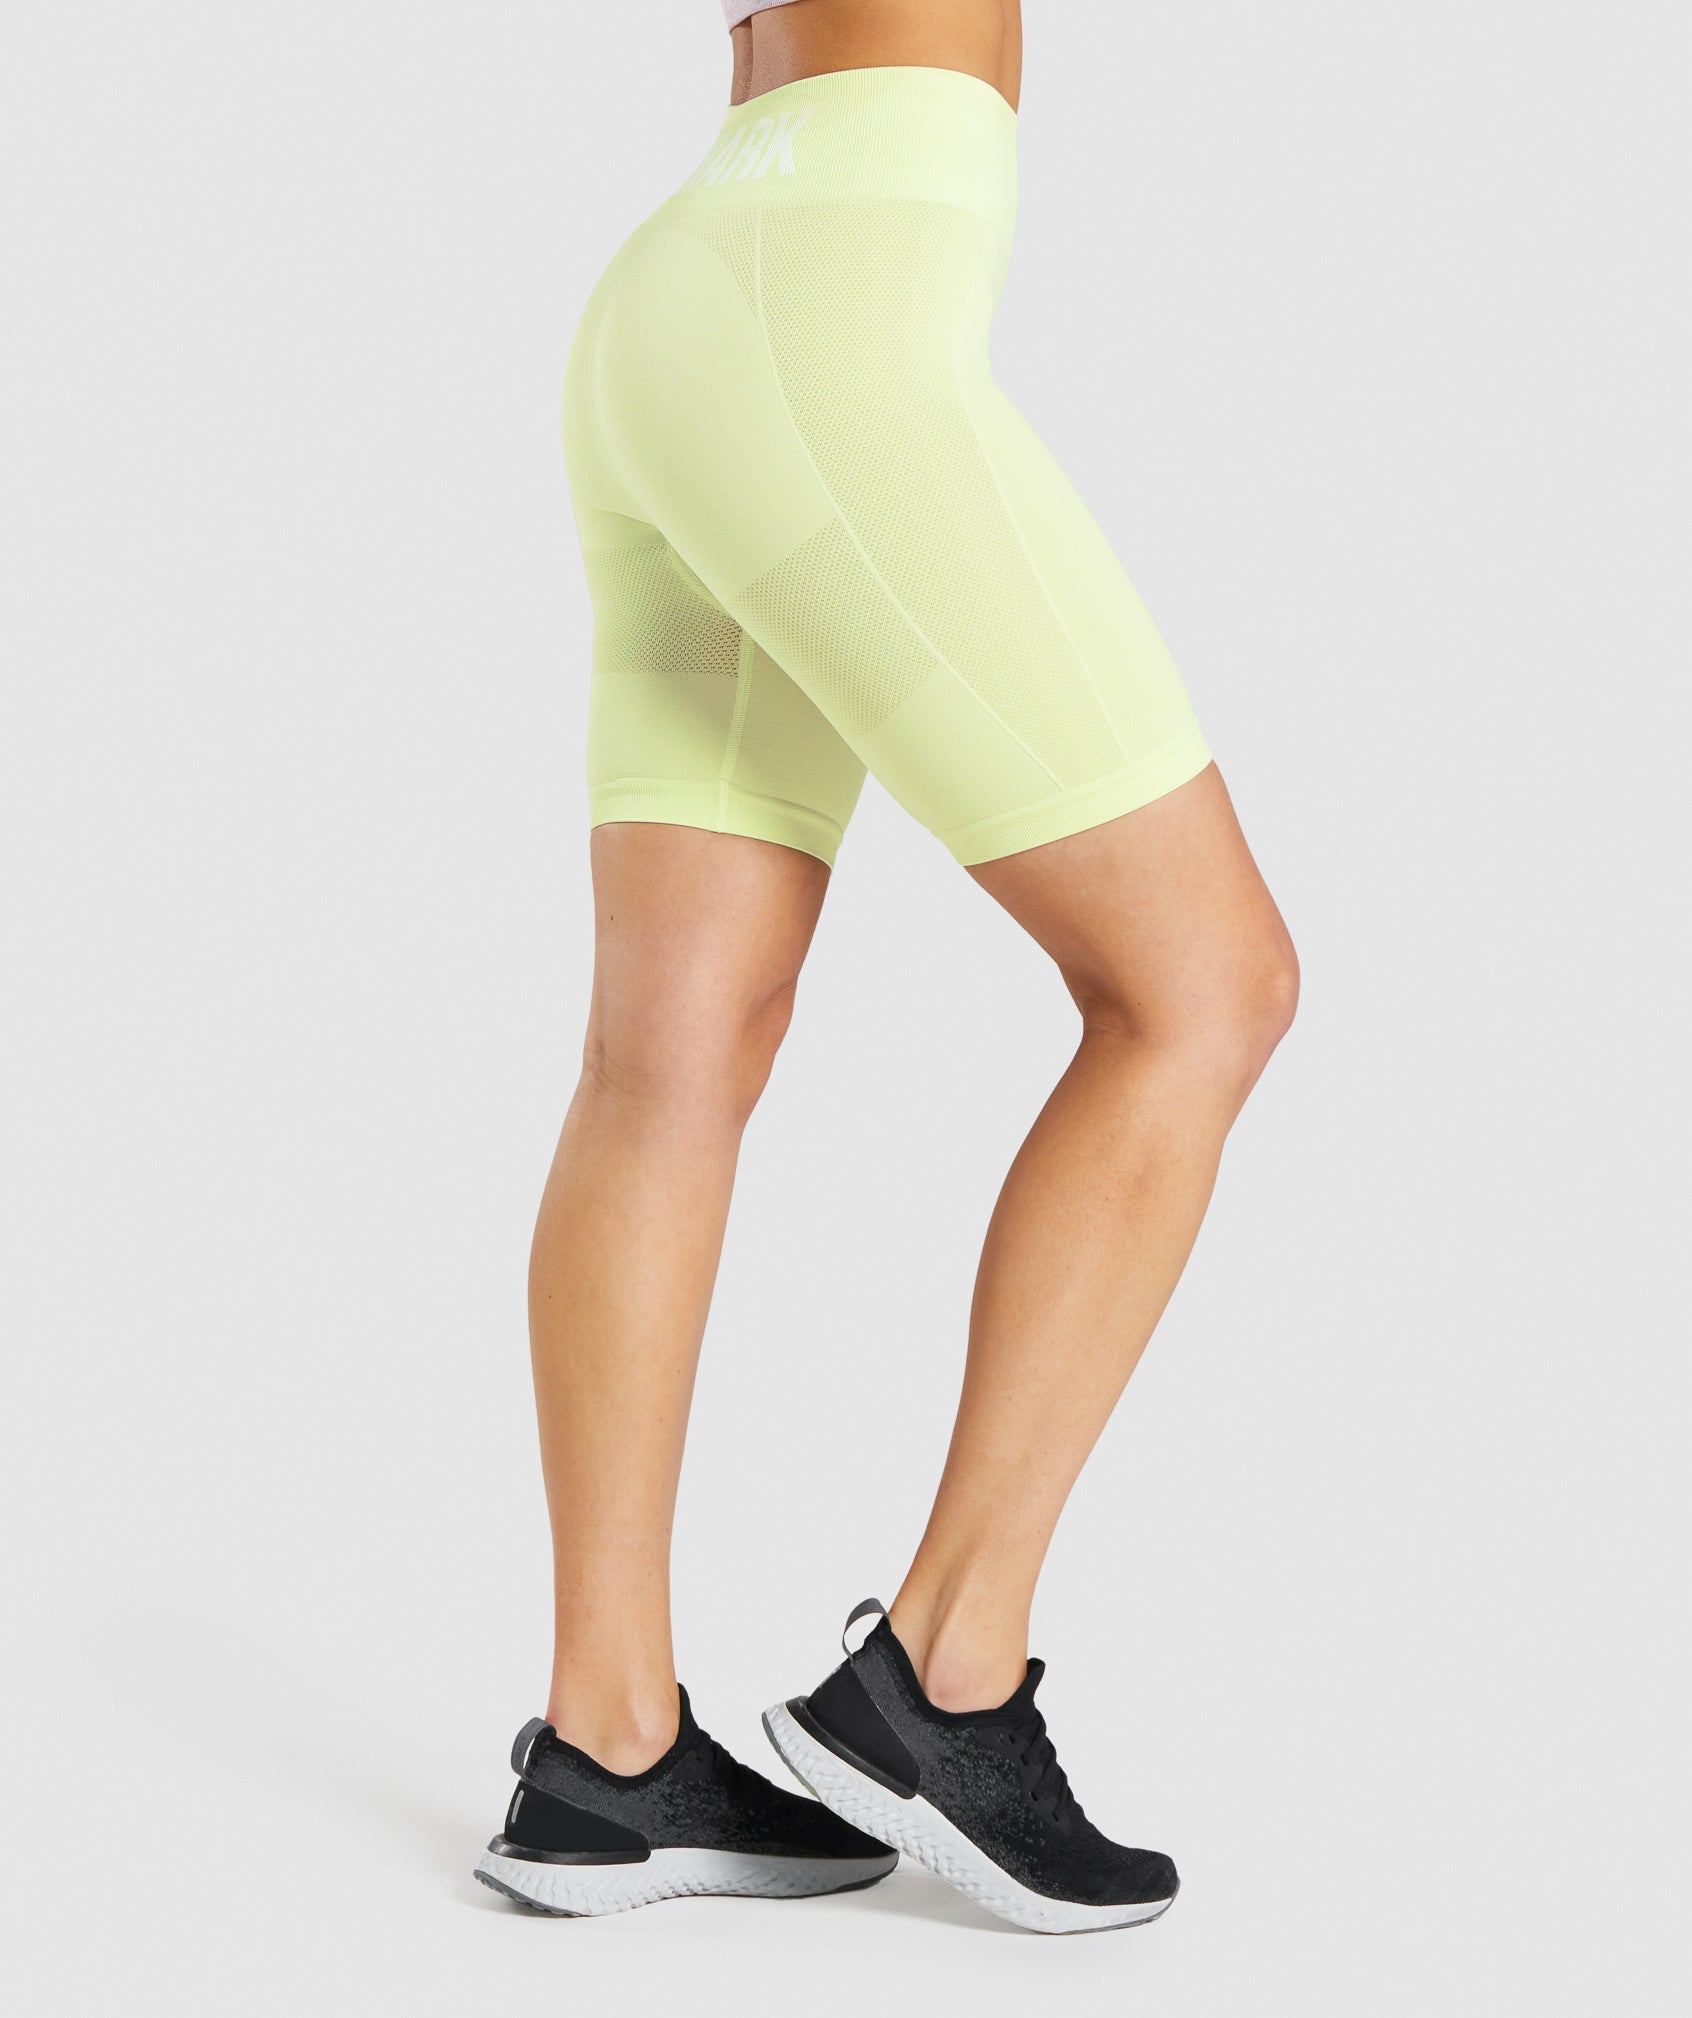 Gymshark Flex High Waisted Leggings Gray Size XS - $36 (28% Off